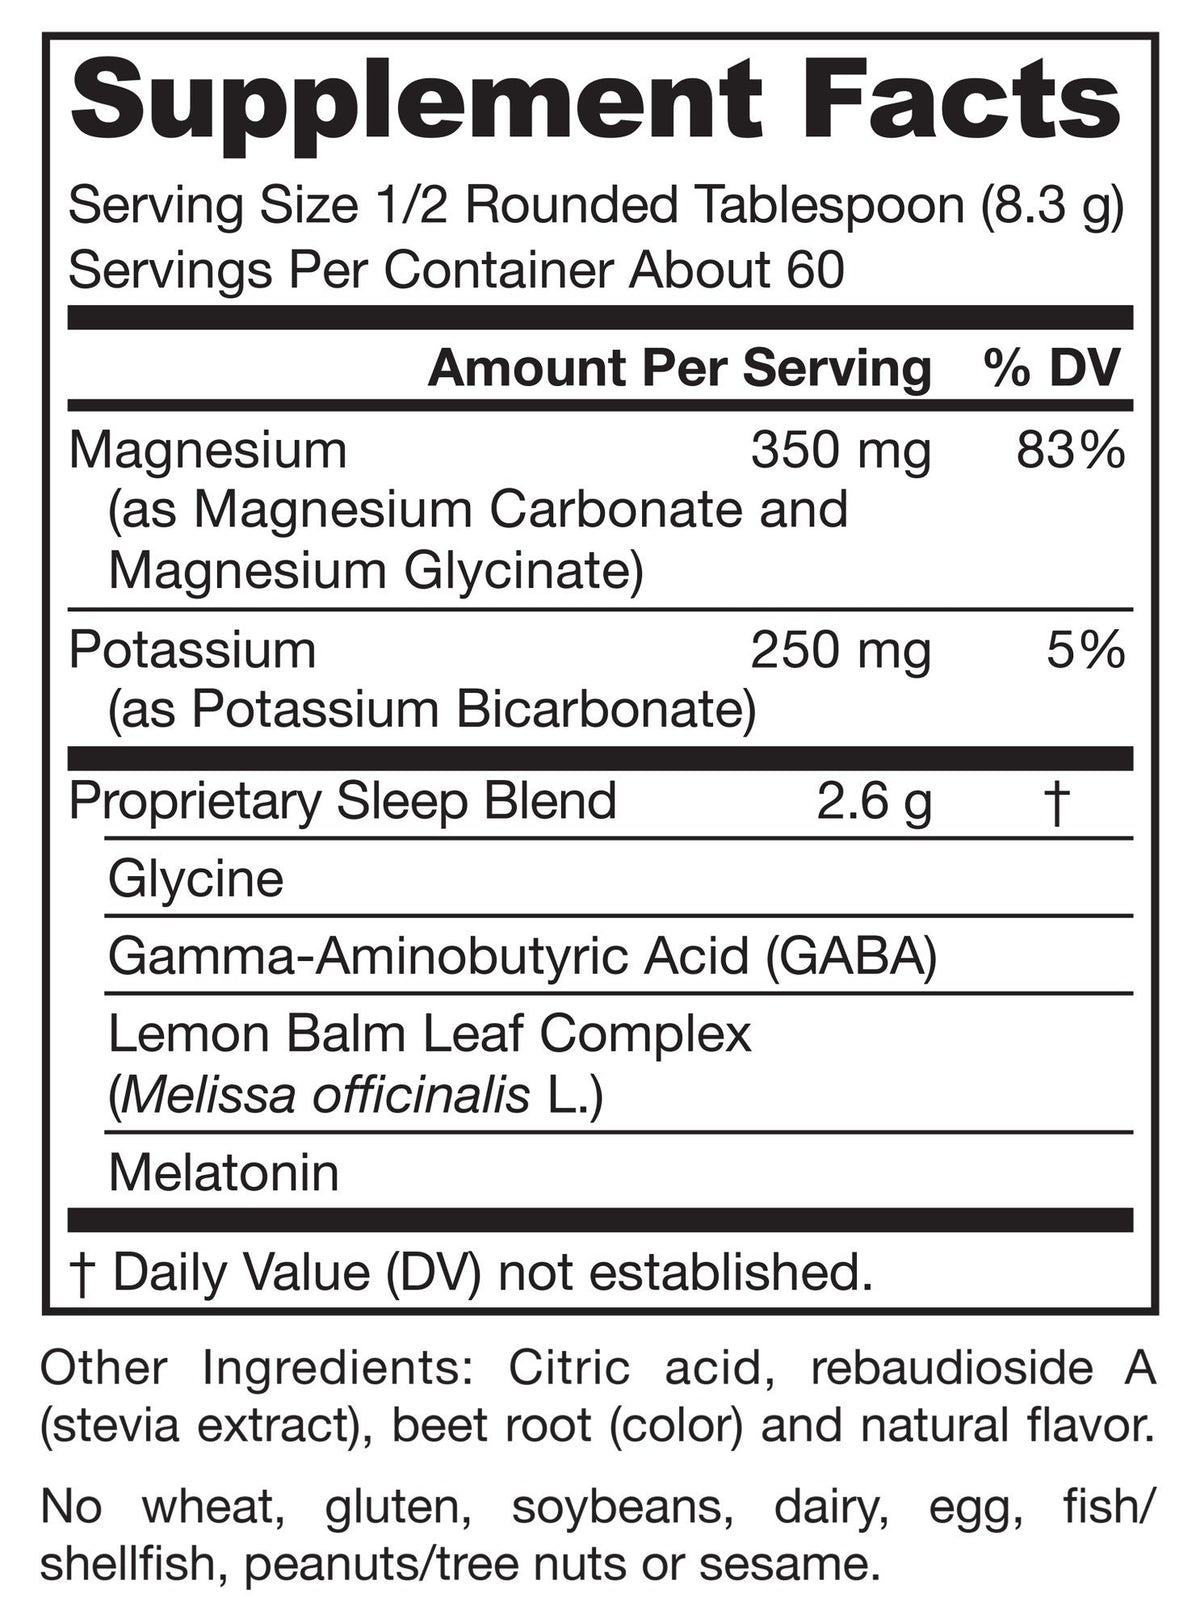 Jarrow Formulas Soothing Night Magnesium Supplement 17.6 oz Powder